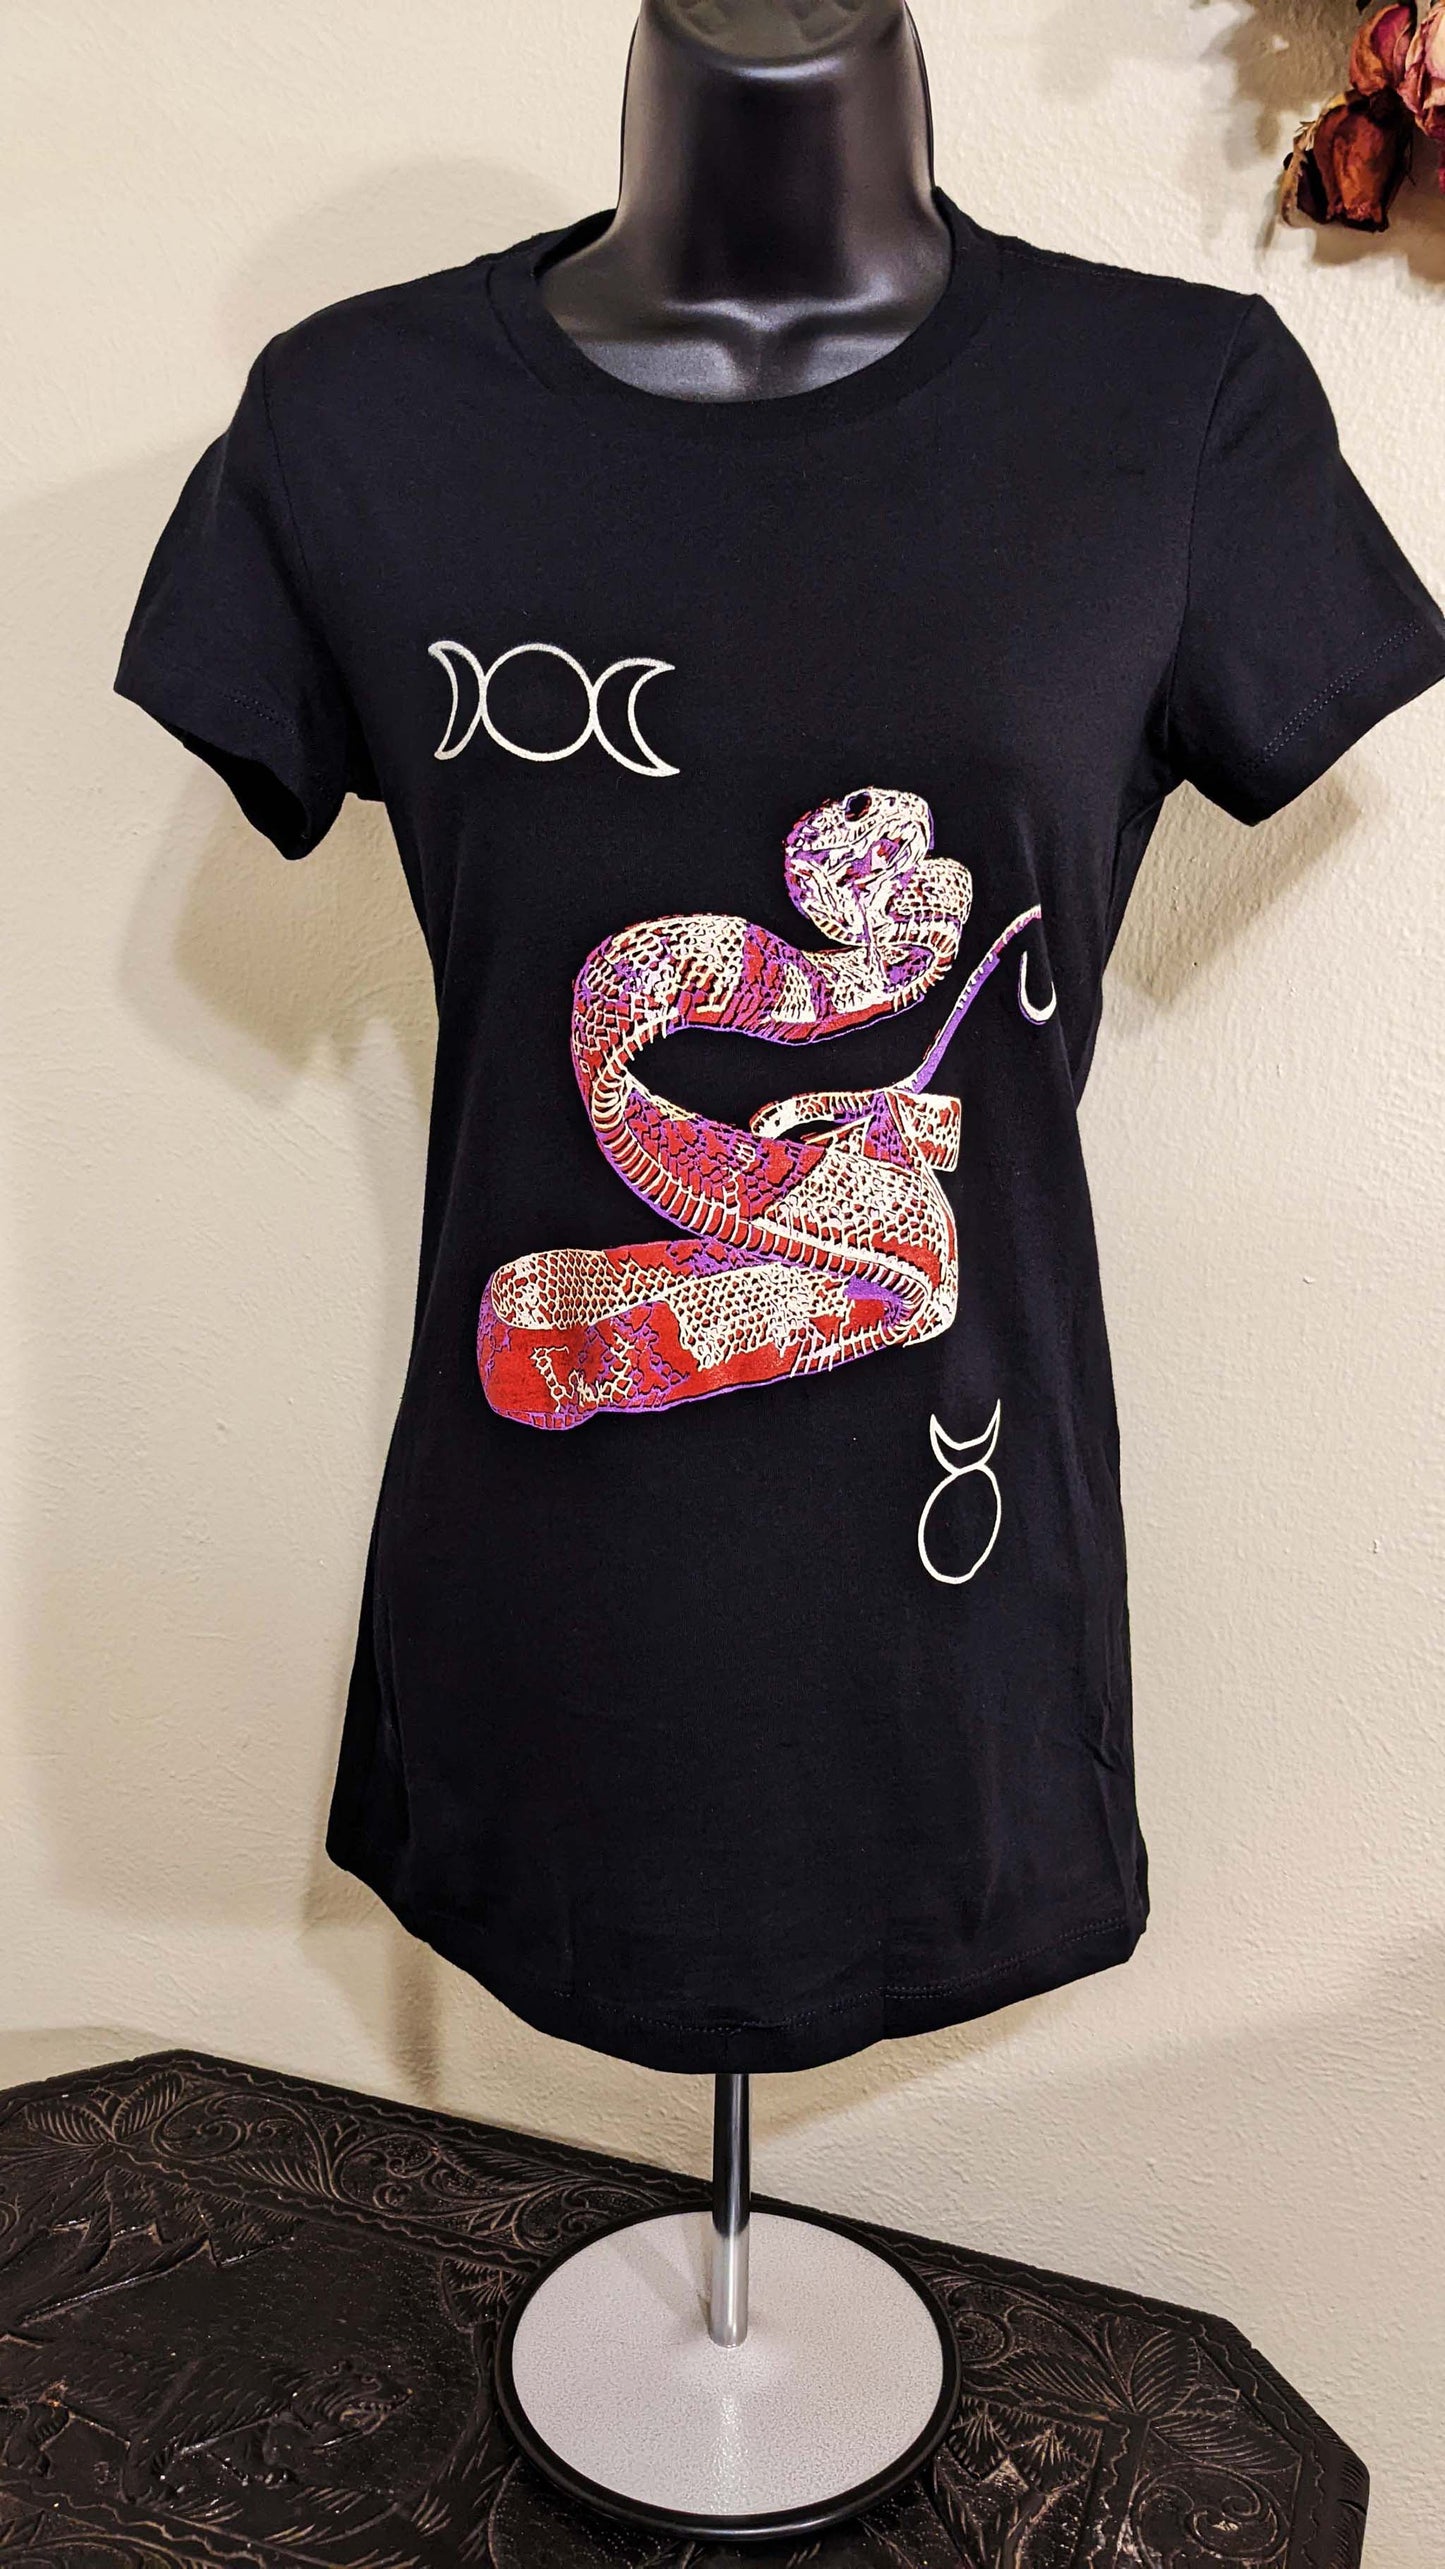 Obsidian Crystal Snake - Women's Cut Black T-Shirt